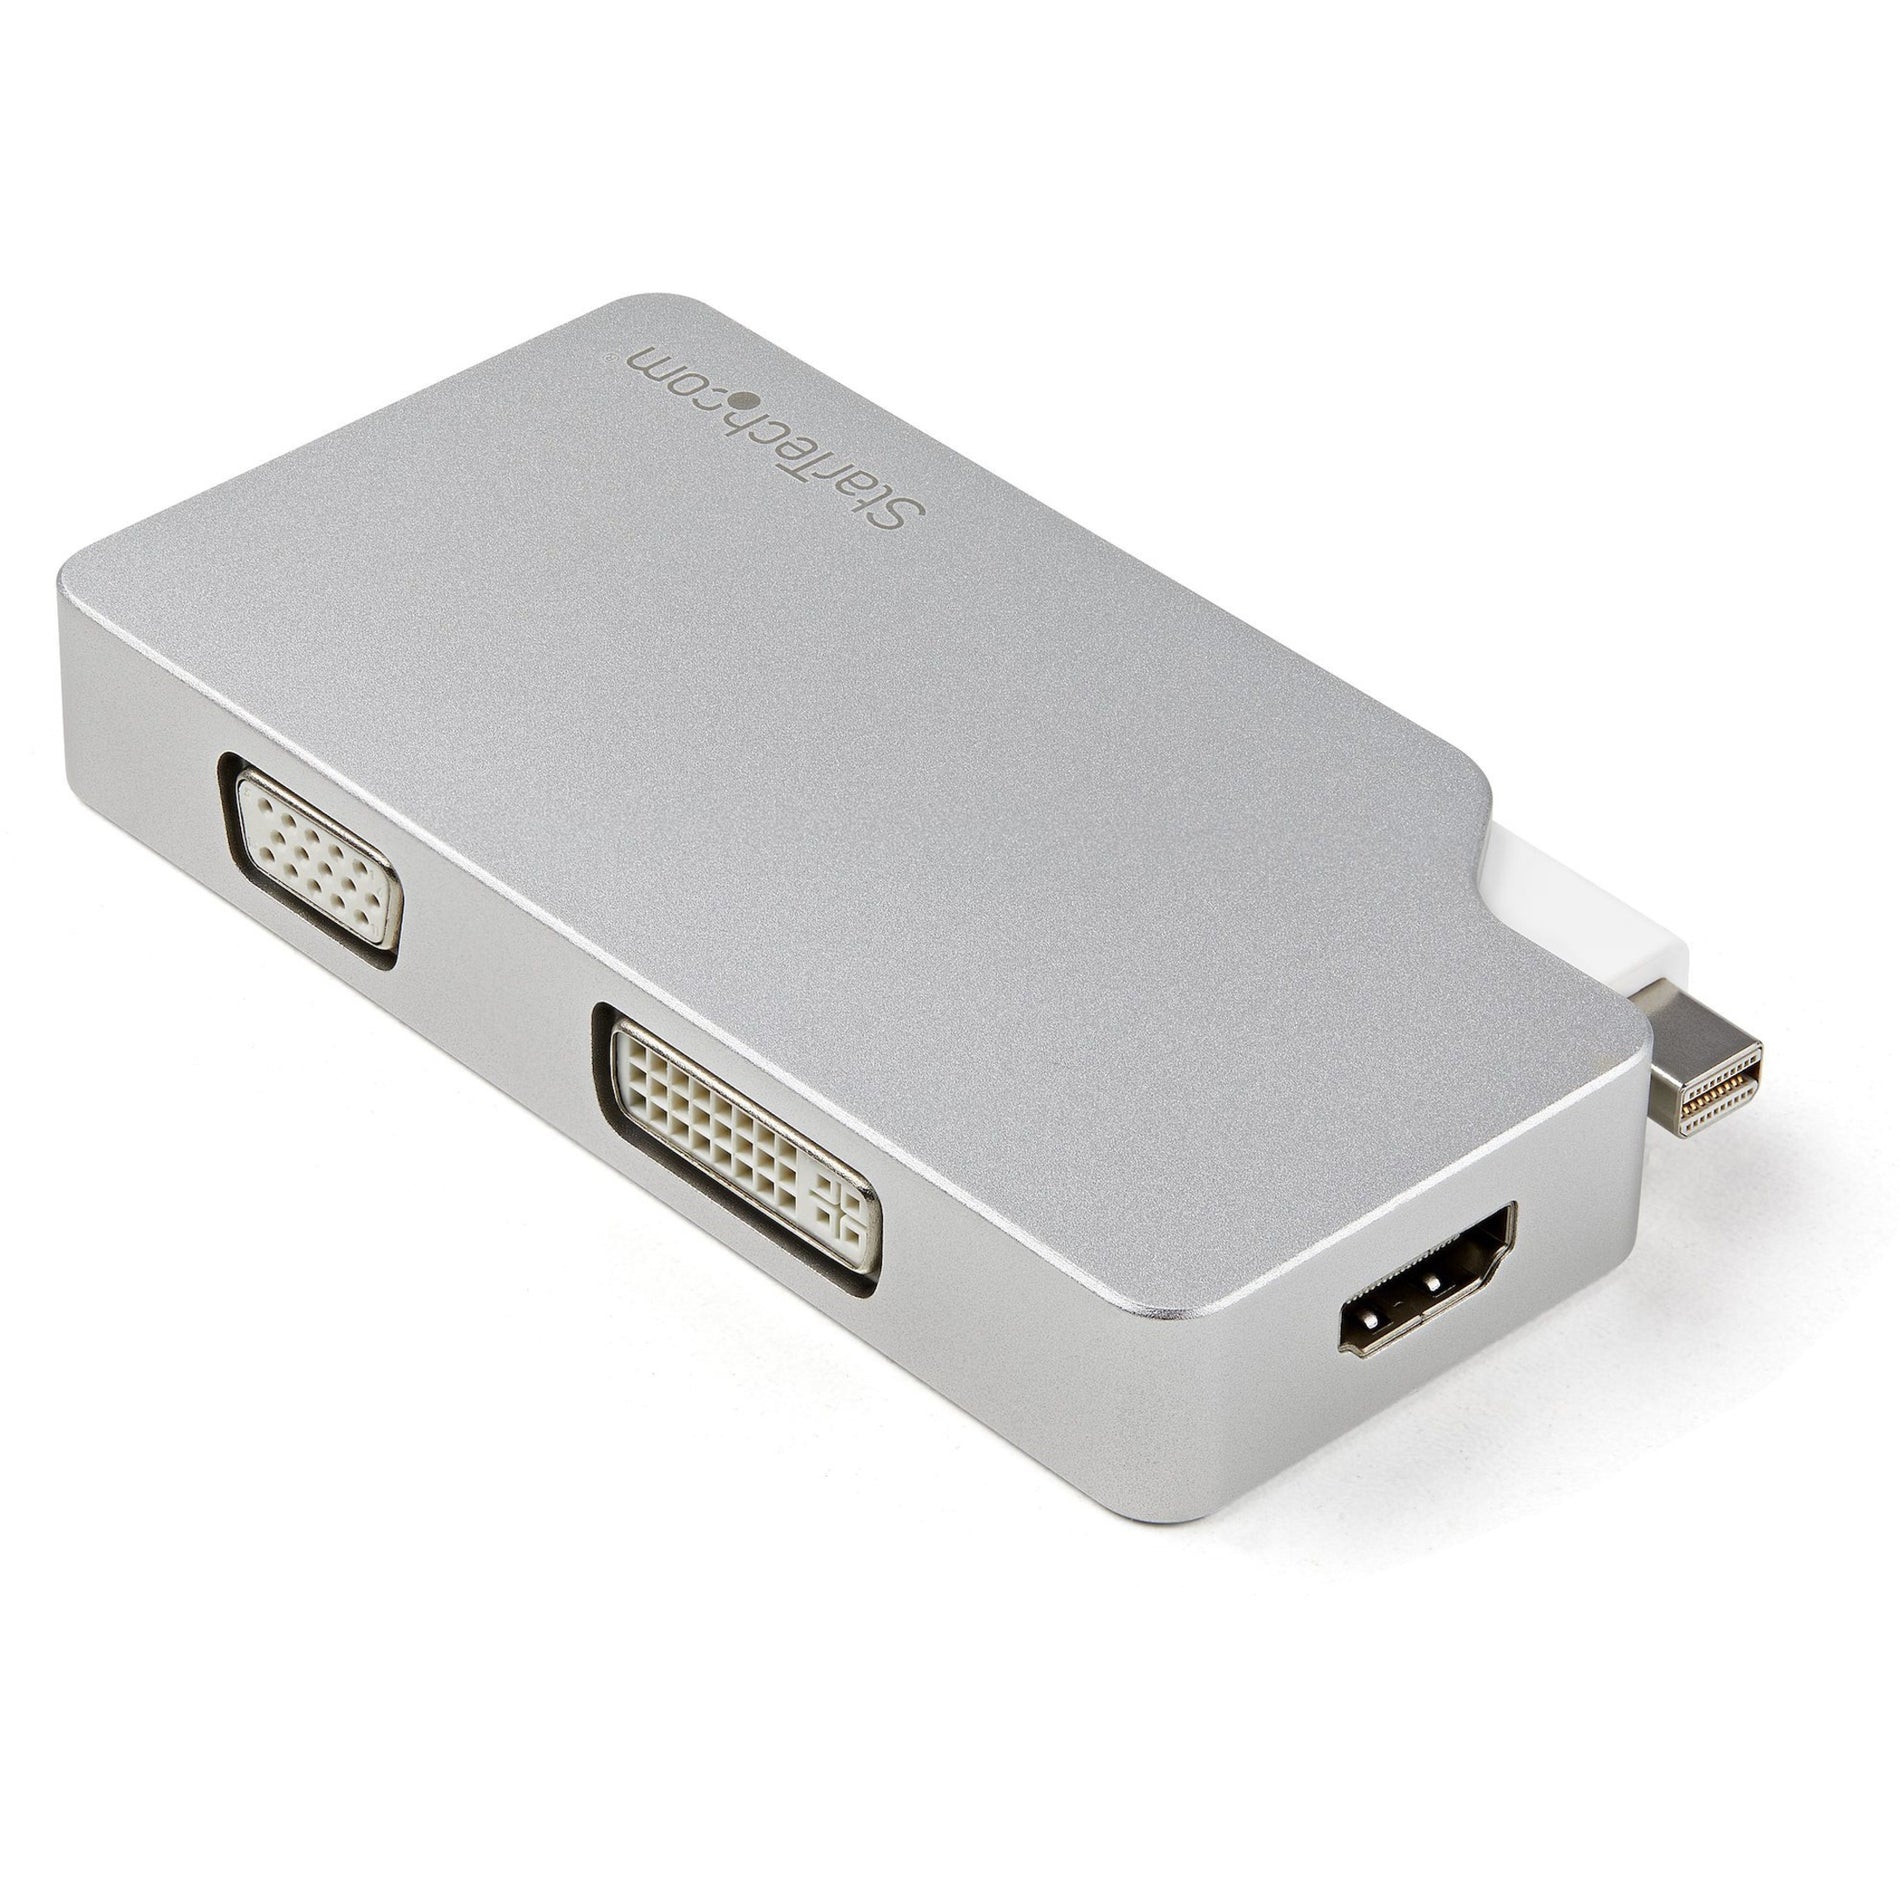 StarTech.com MDPVGDVHD4K Travel Audio/Video Adapter, 3-in-1 Mini DisplayPort to VGA, DVI or HDMI - 4K [Discontinued]